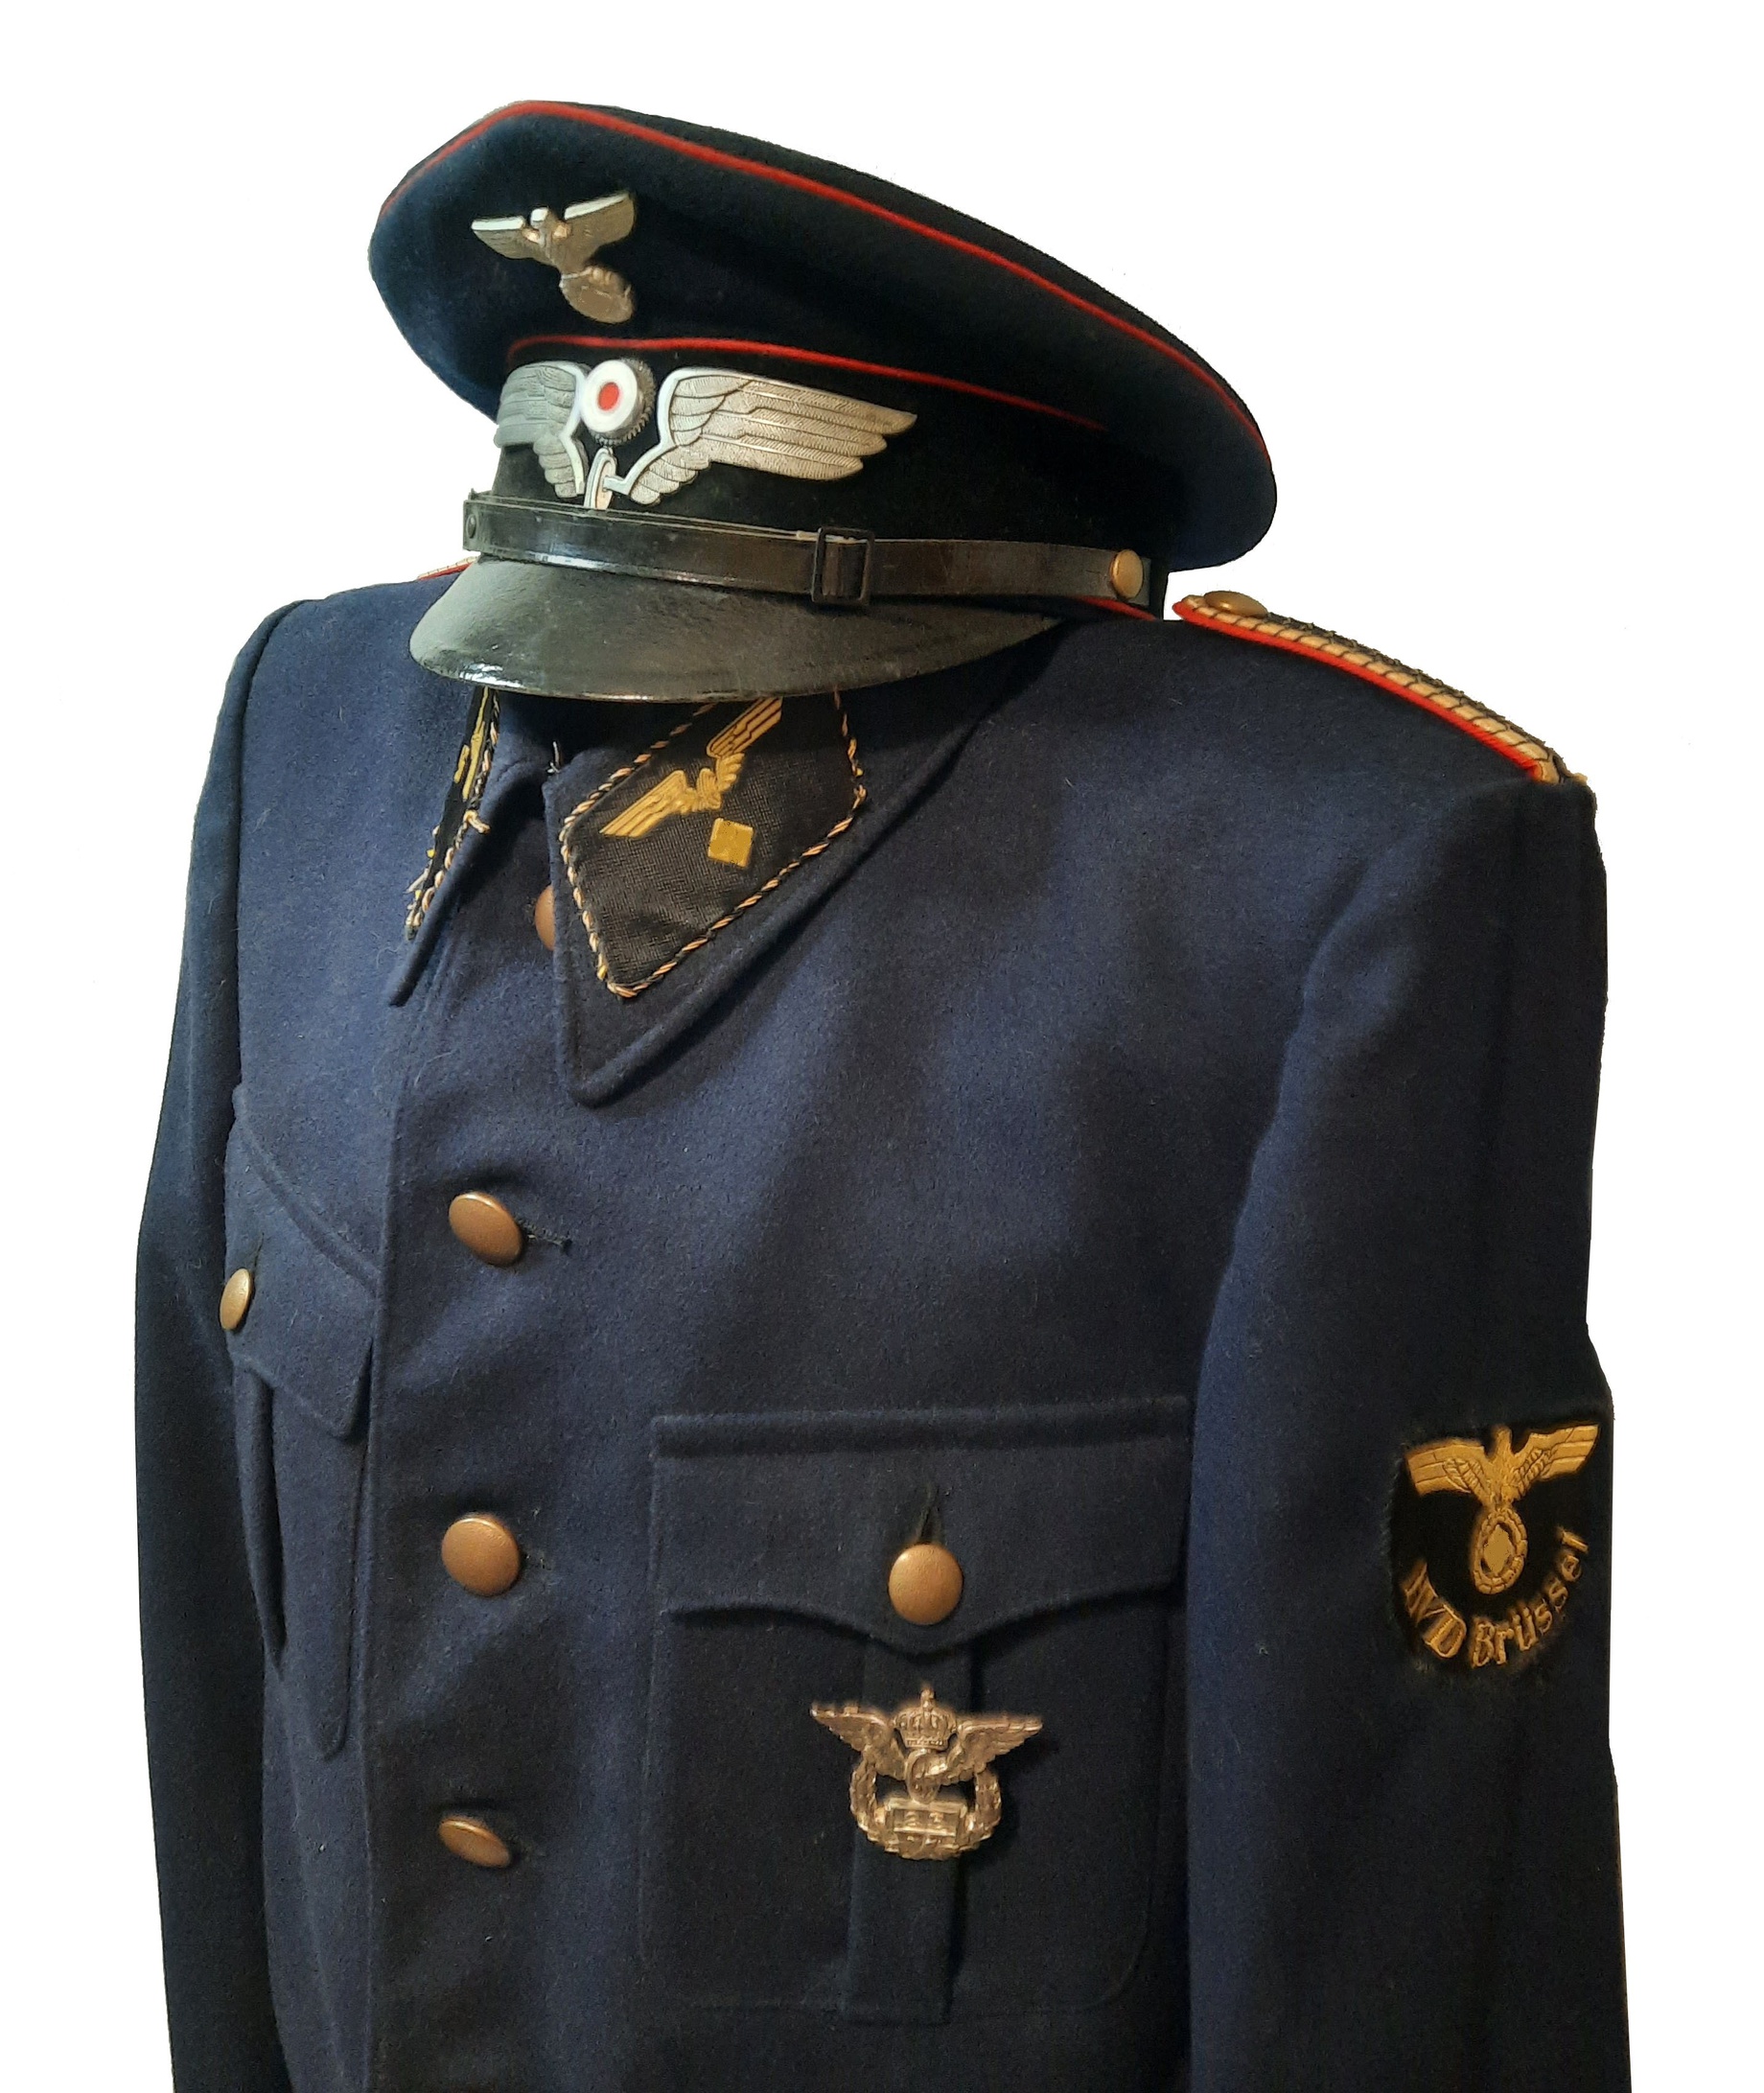 Китель униформа служащего Рейхсбана службы охраны железных дорог Форма Рейх Вермахт ОРИГИНАЛ!!!